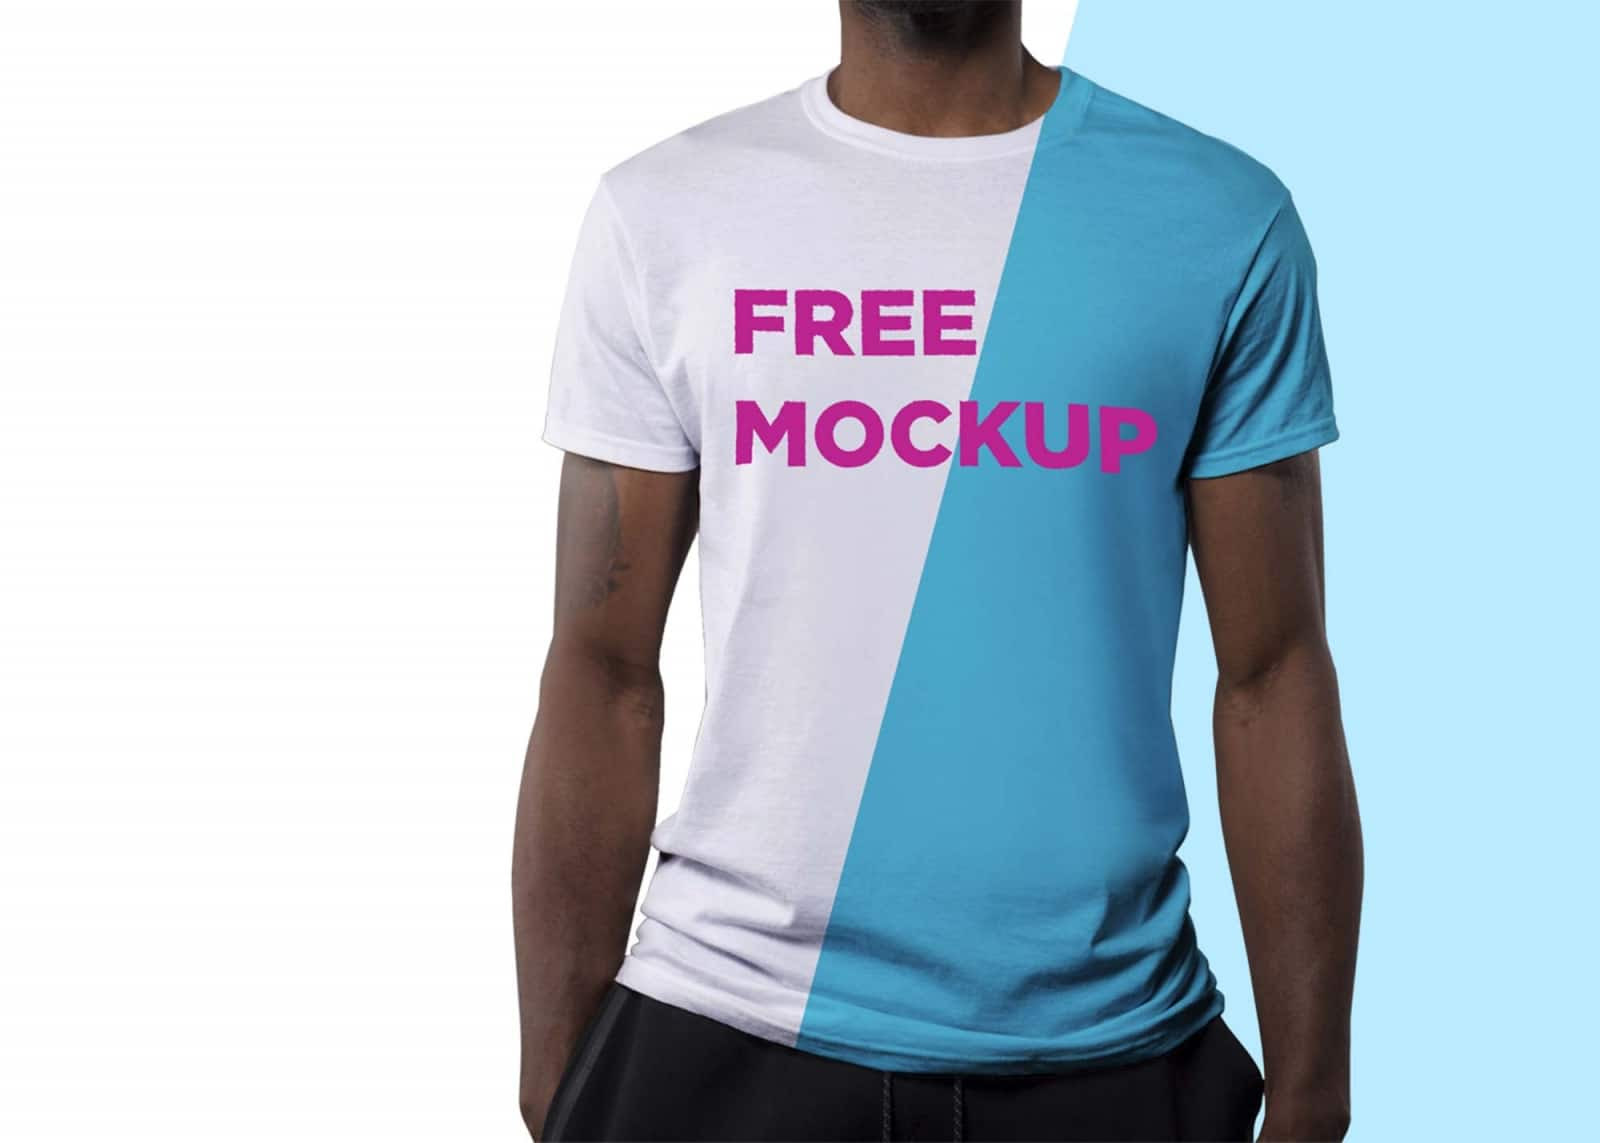 Tshirt Mockup in PSD Download For Free DesignHooks